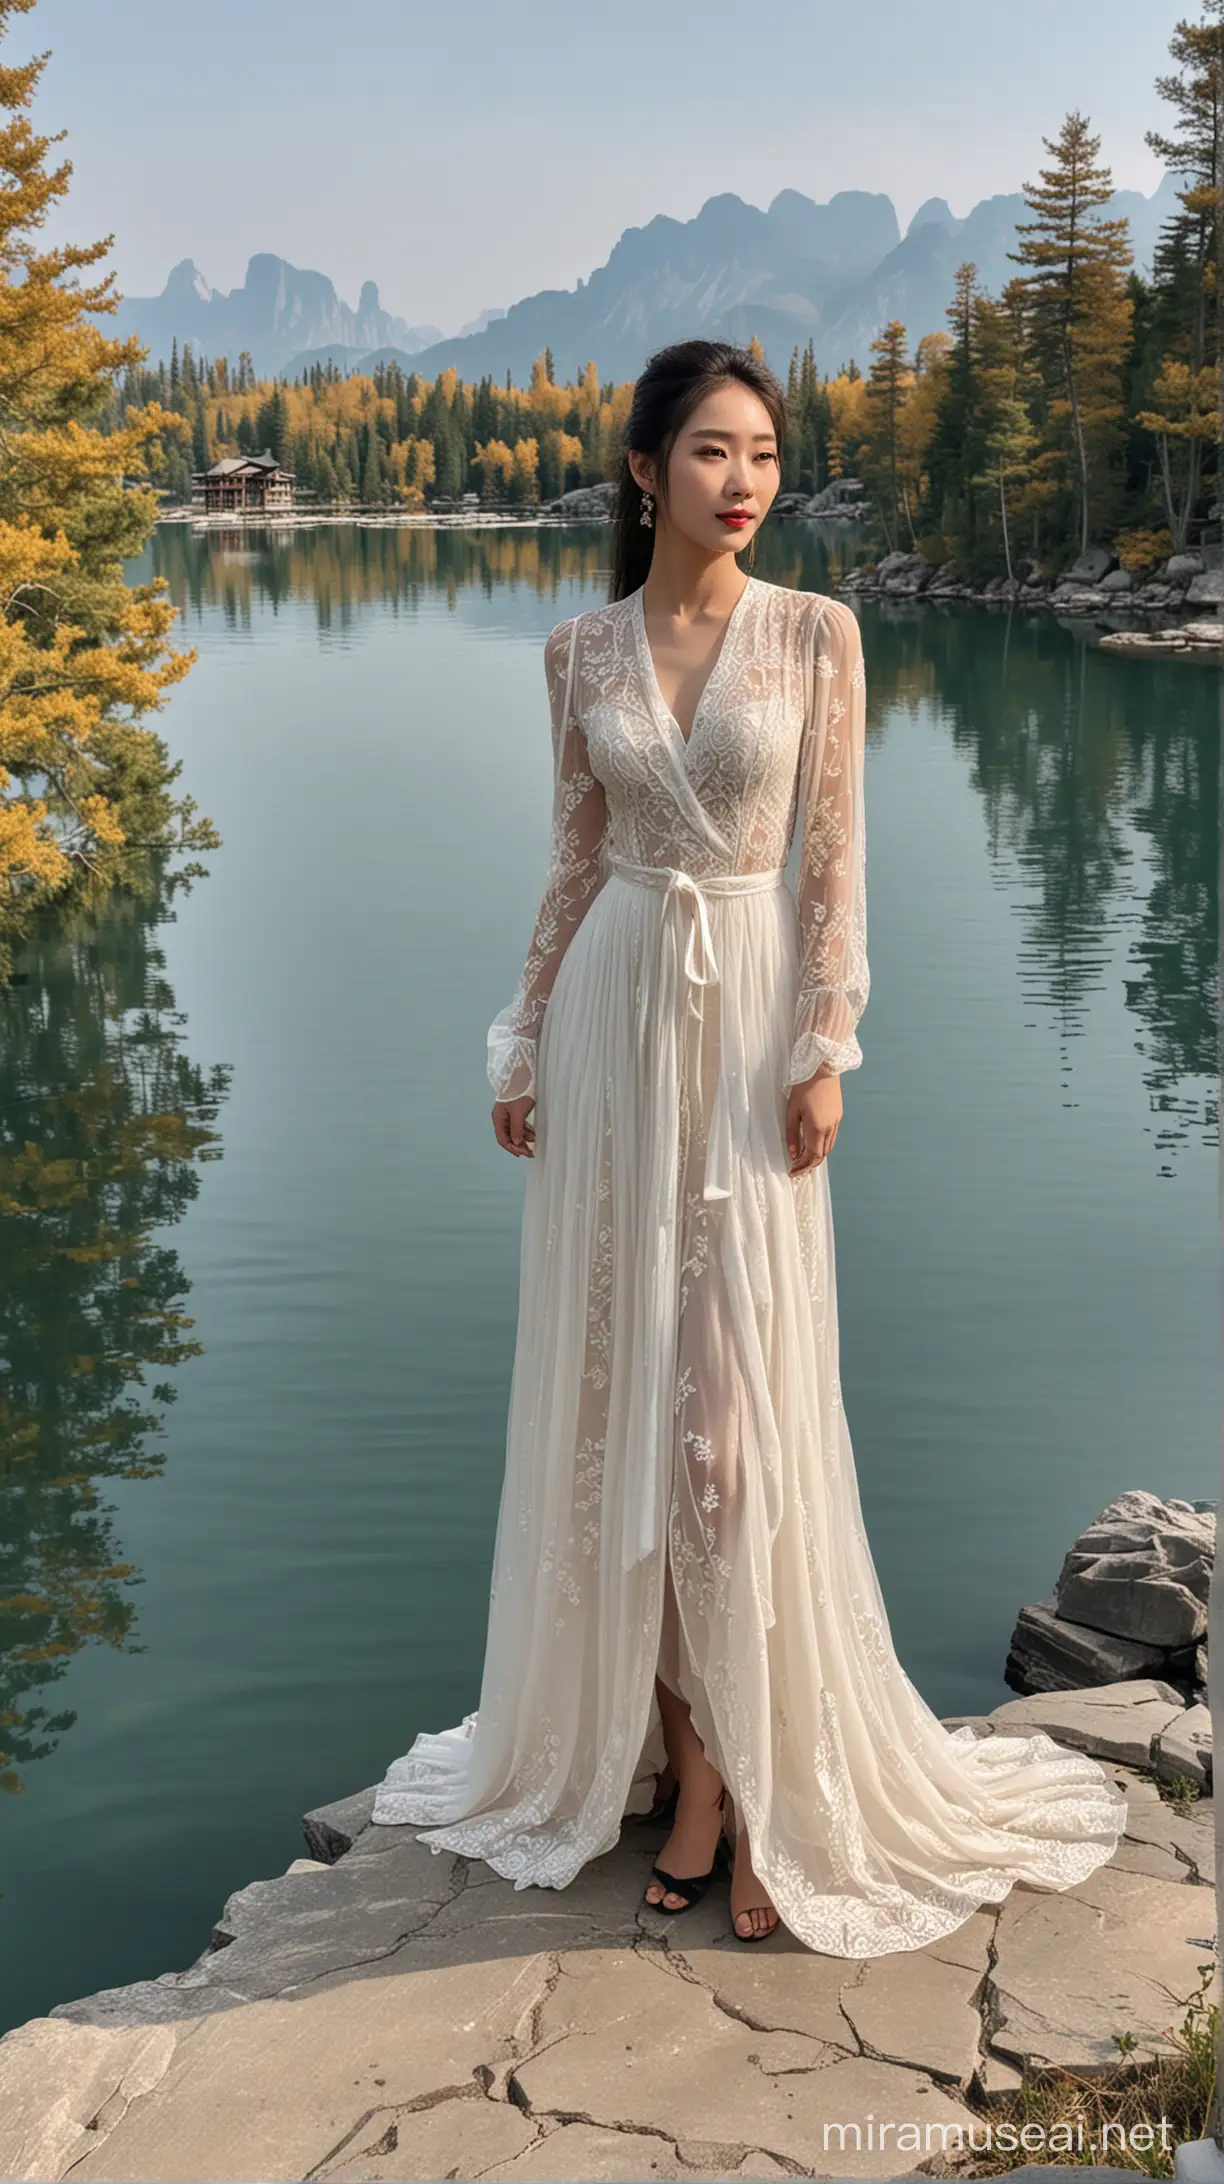 Elegant Chinese Woman Enjoying Thousand Island Lake Scenic Beauty